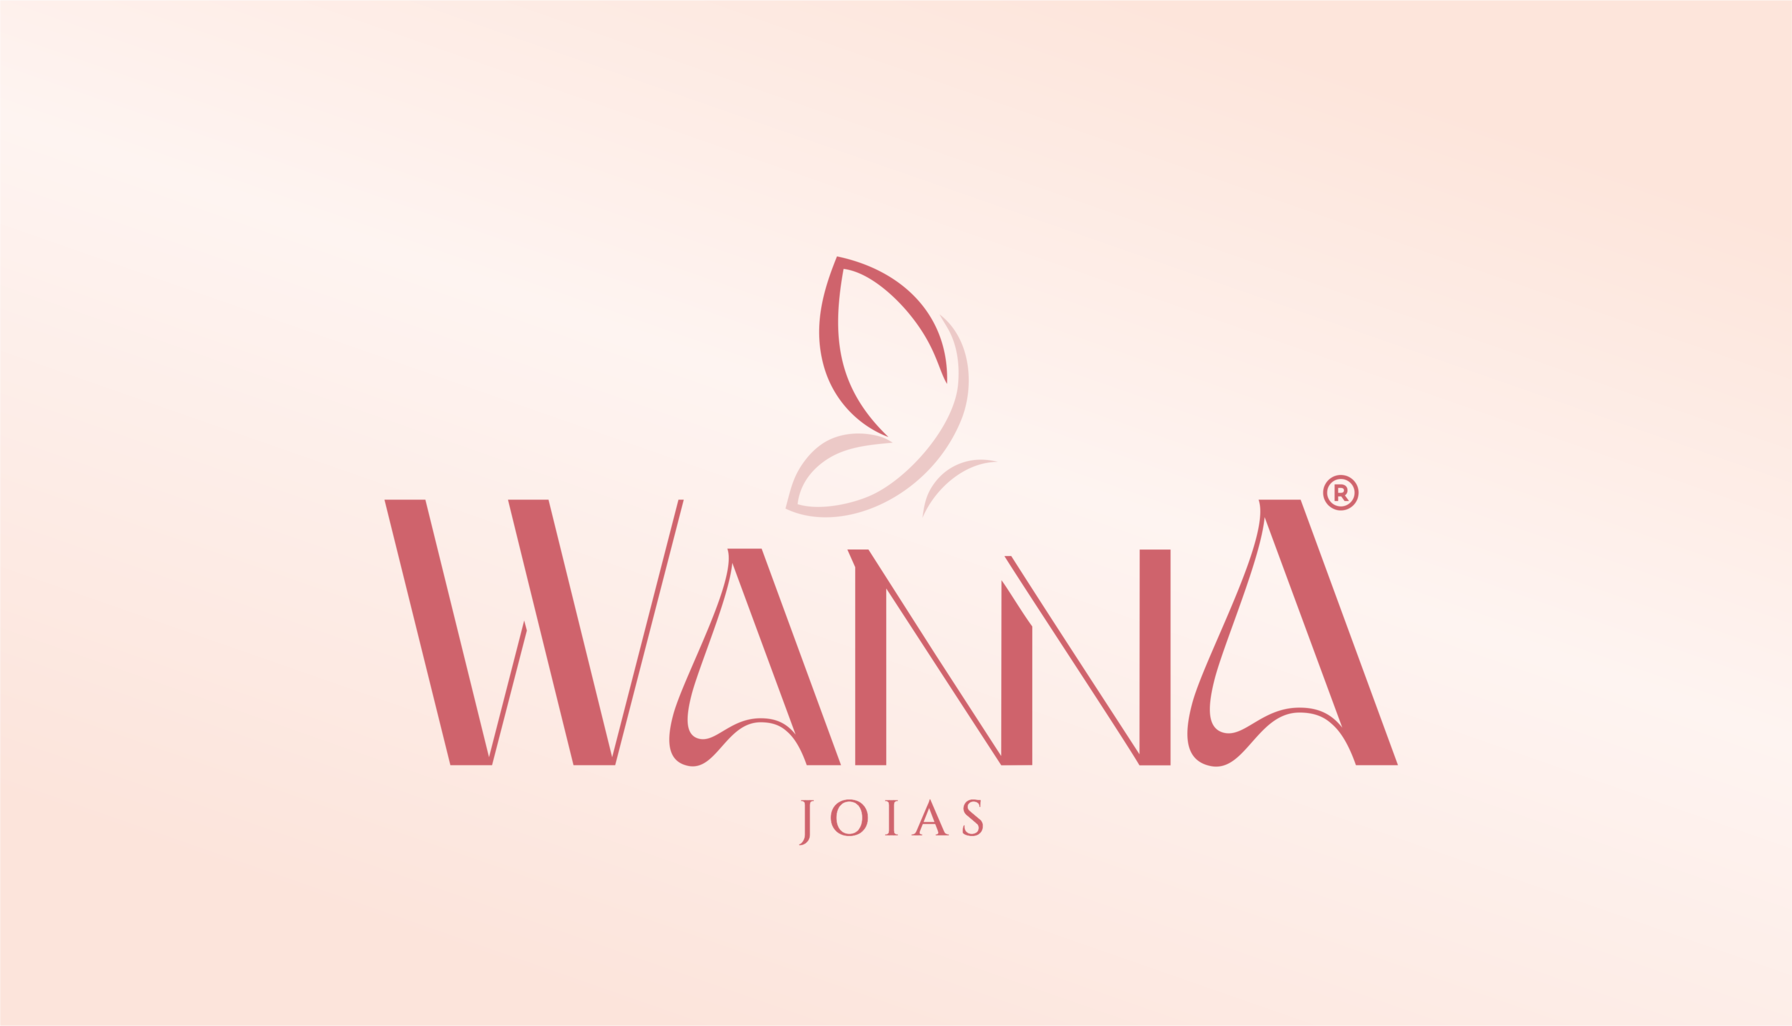 (c) Wannajoias.com.br